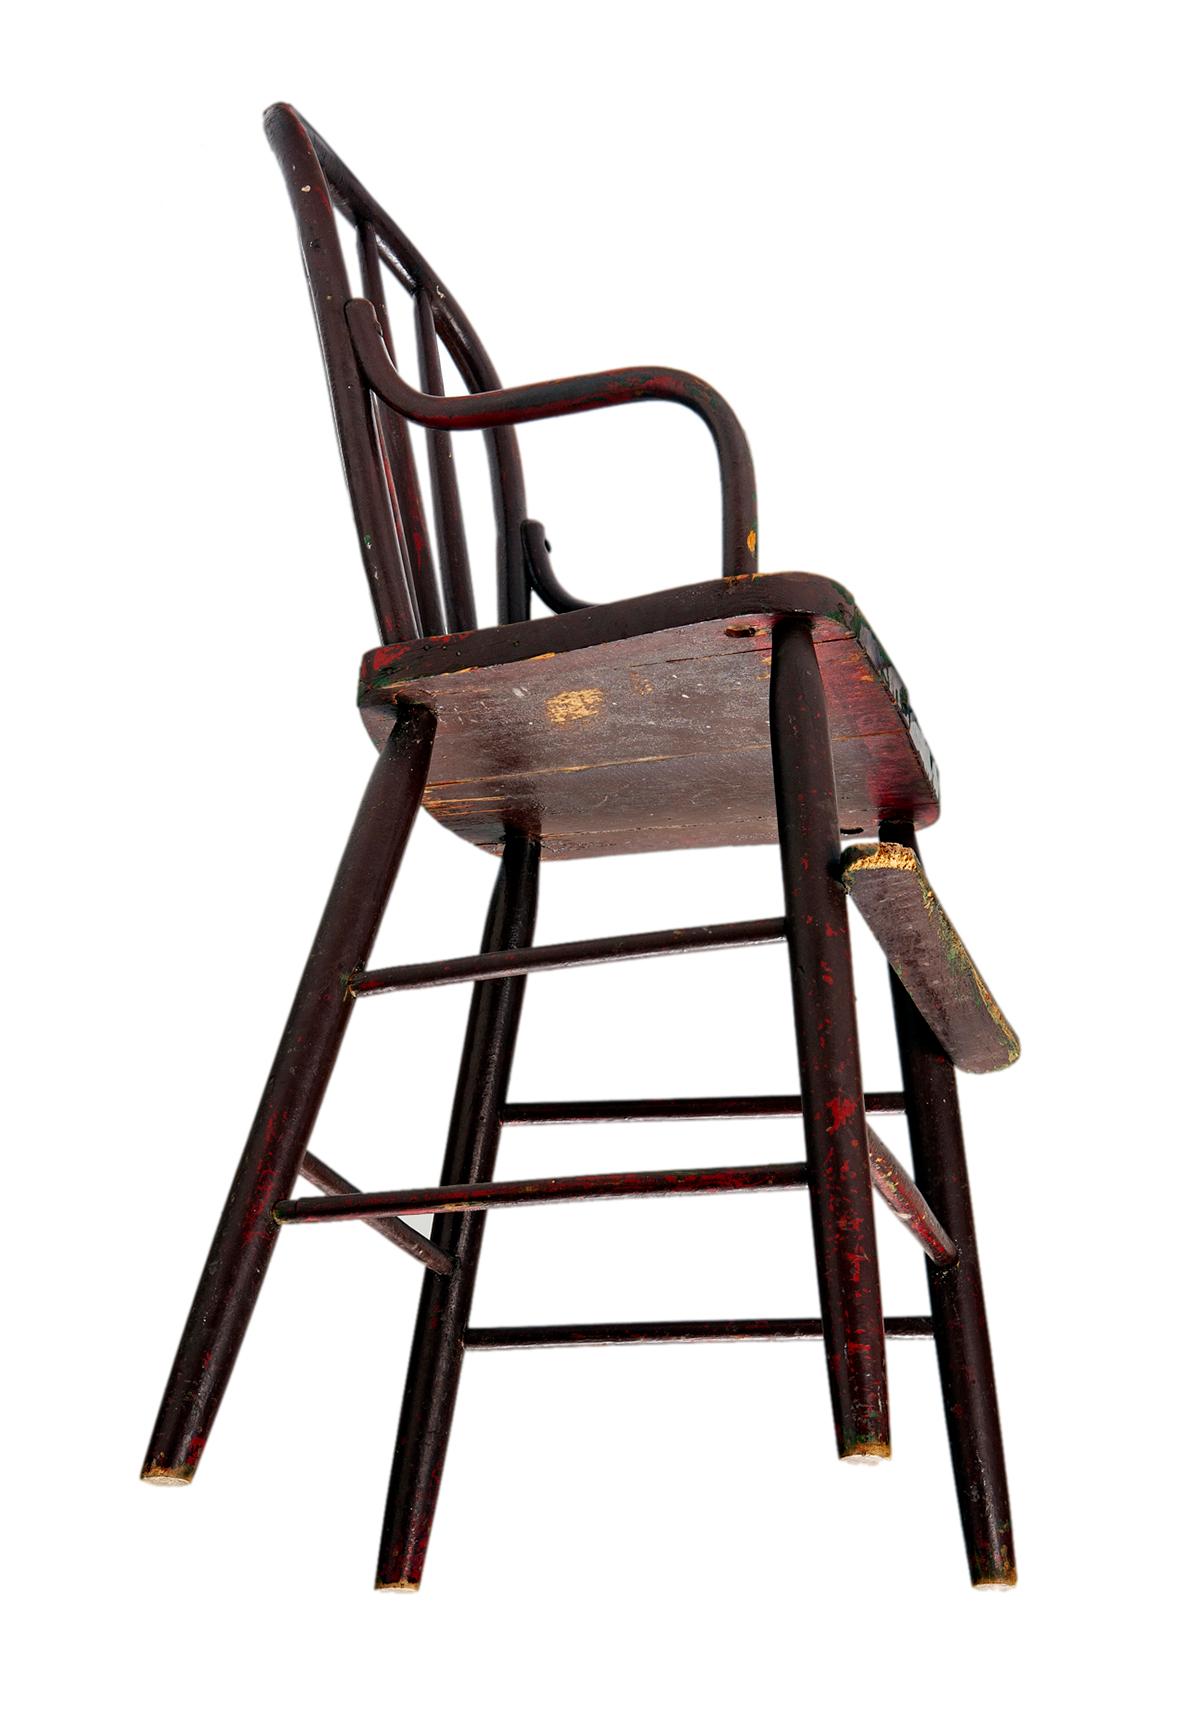 Hardwood Primitive Antique Bentwood Child's High Chair